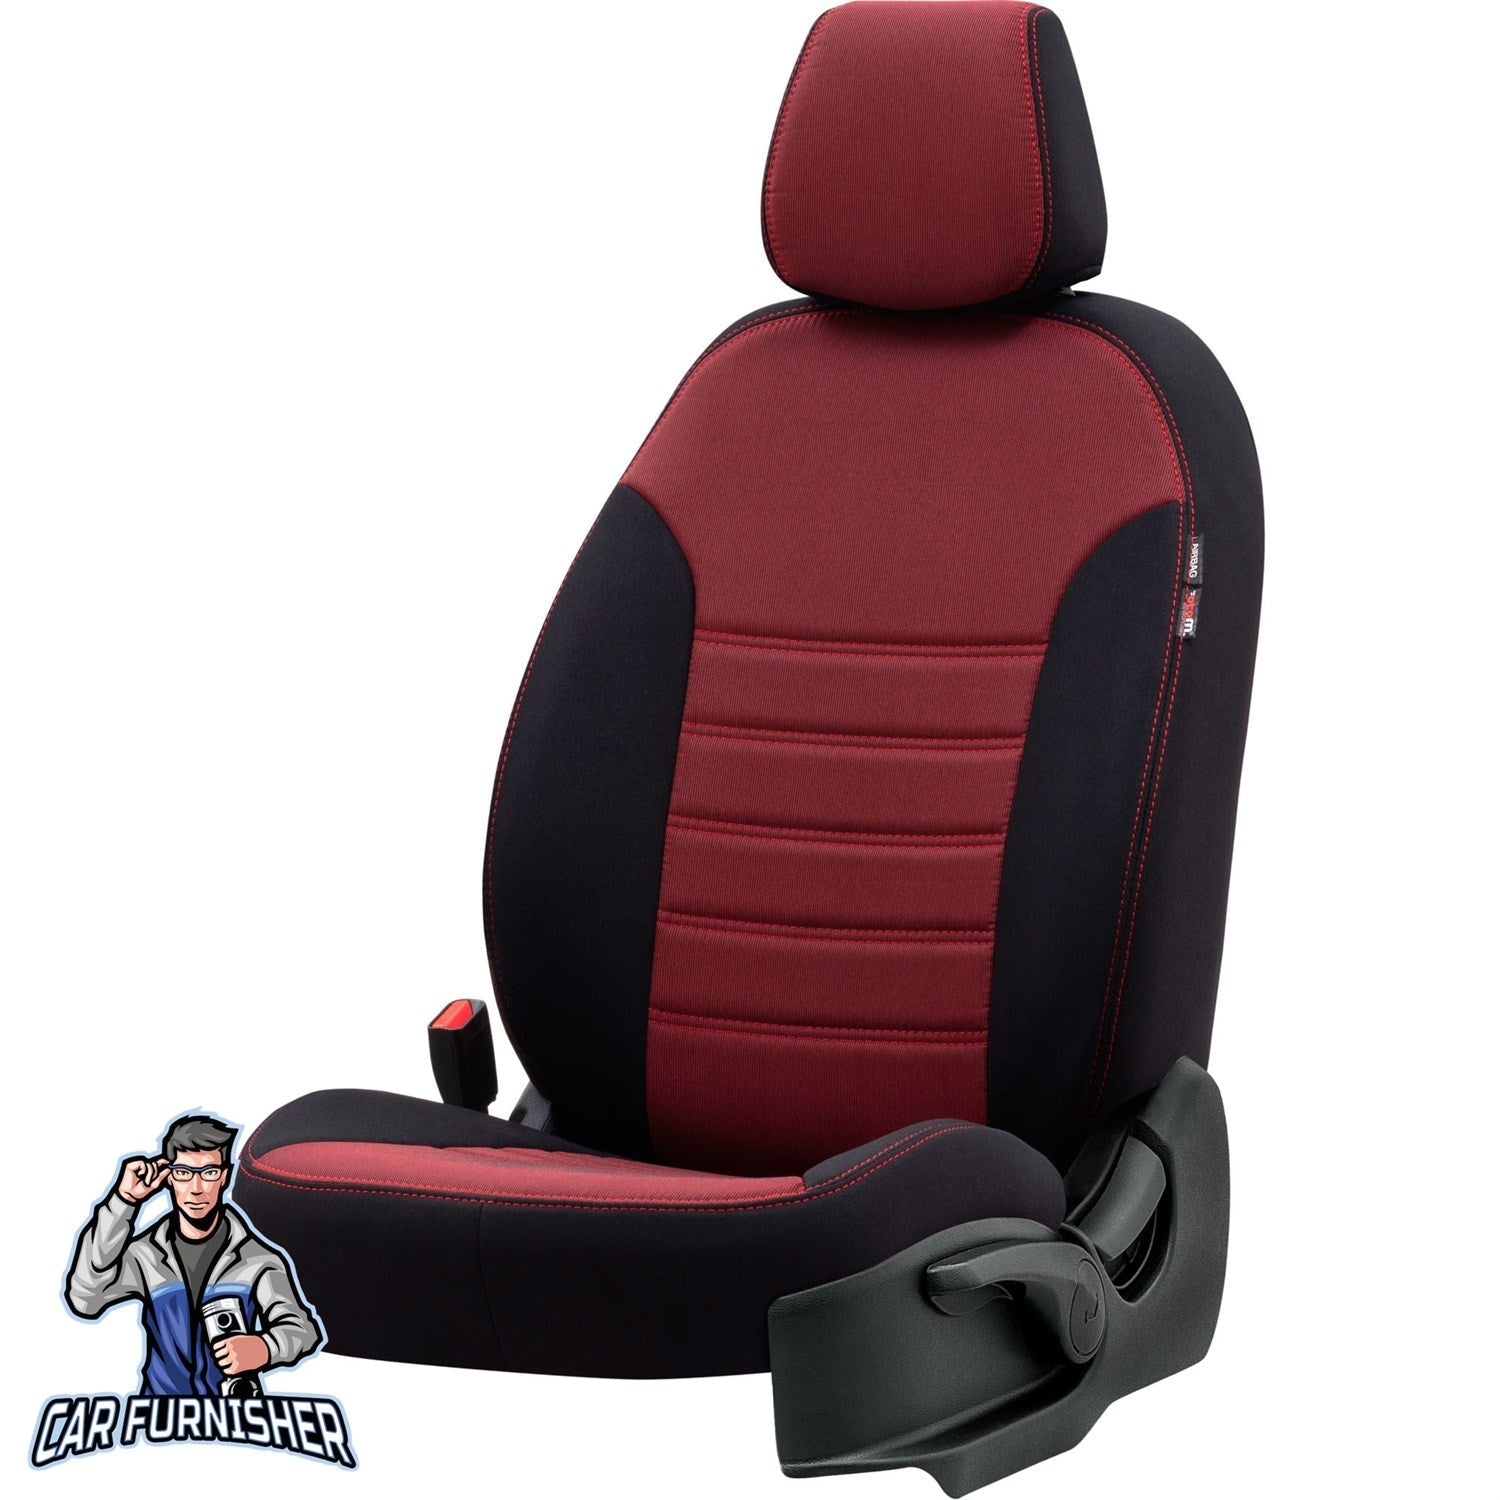 Ford Mondeo Seat Covers Original Jacquard Design Red Jacquard Fabric